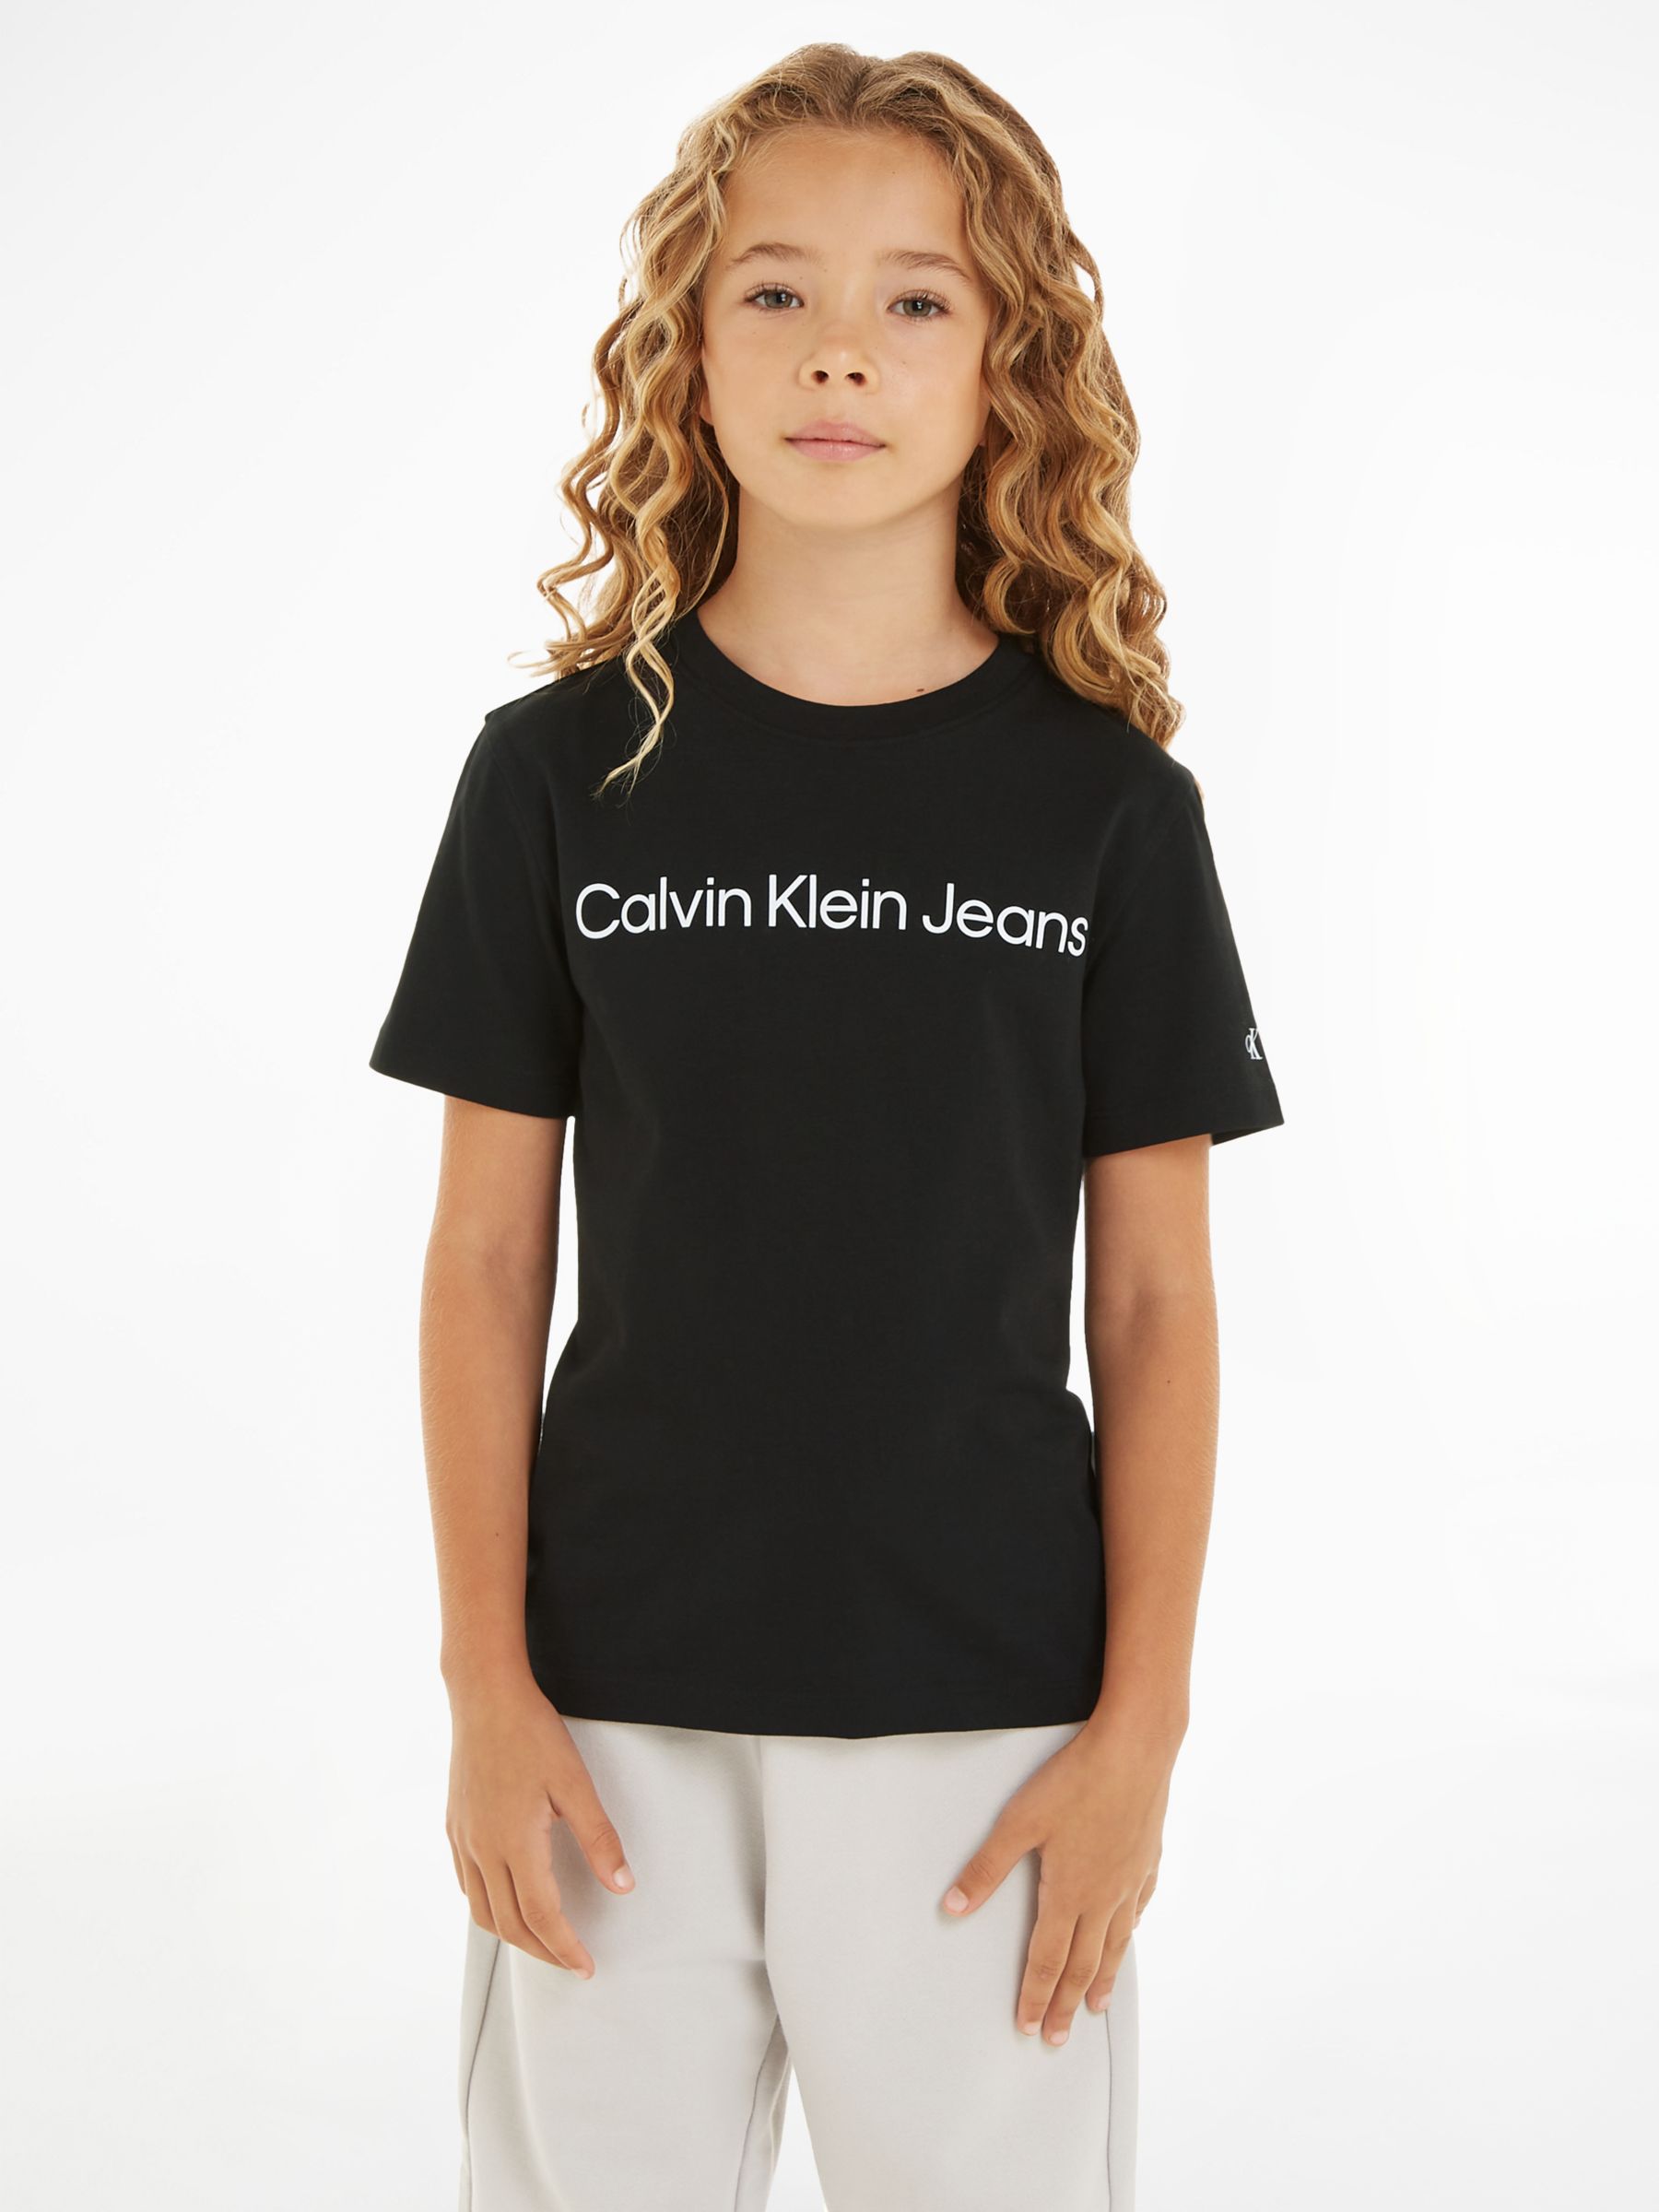 Girls' Calvin Klein Tops